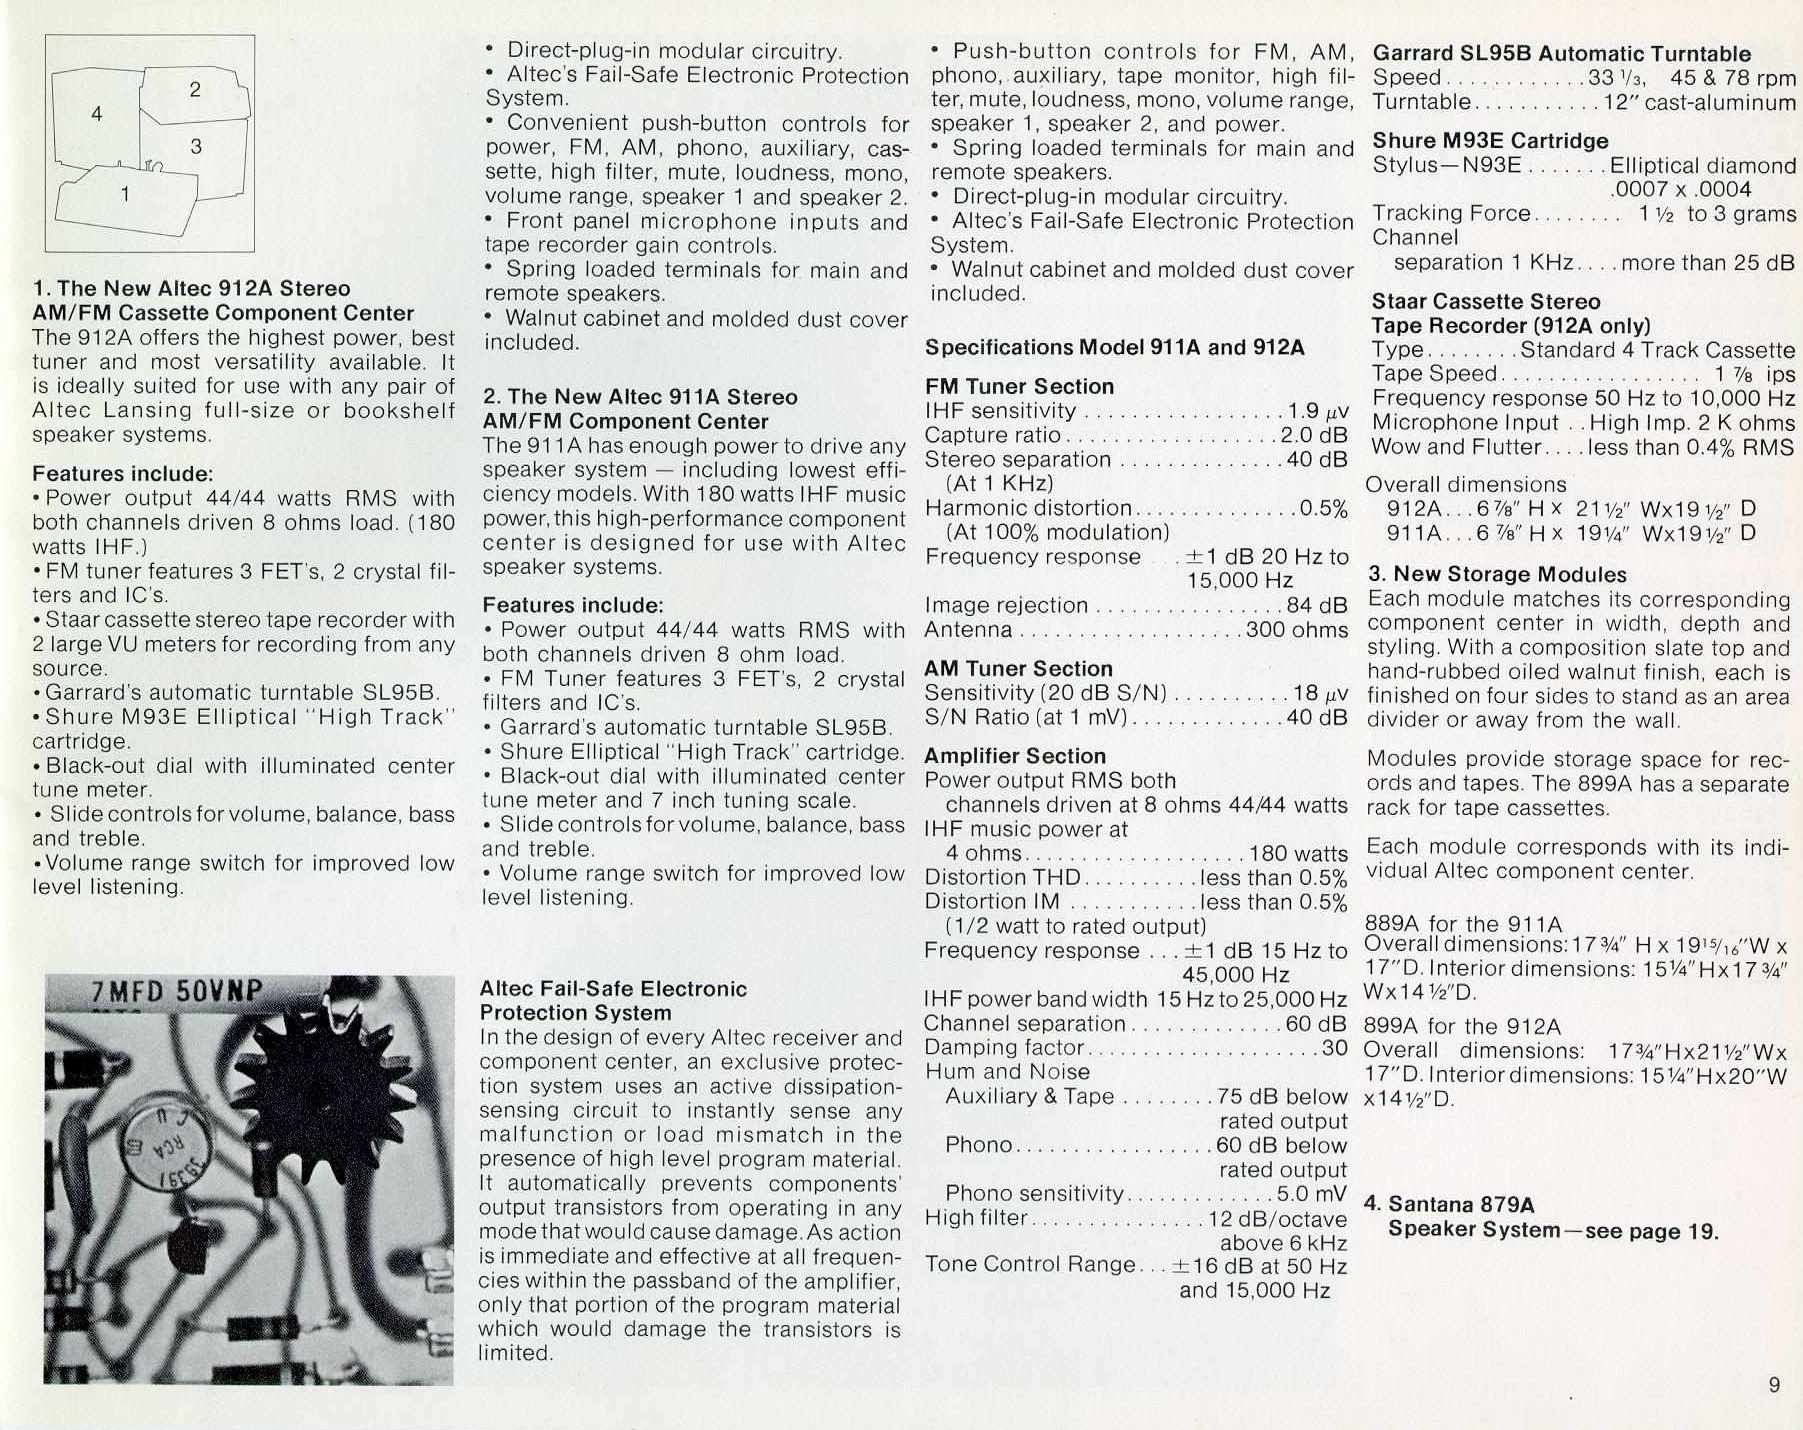 1971 Altec Lansing Katalog-11.jpg